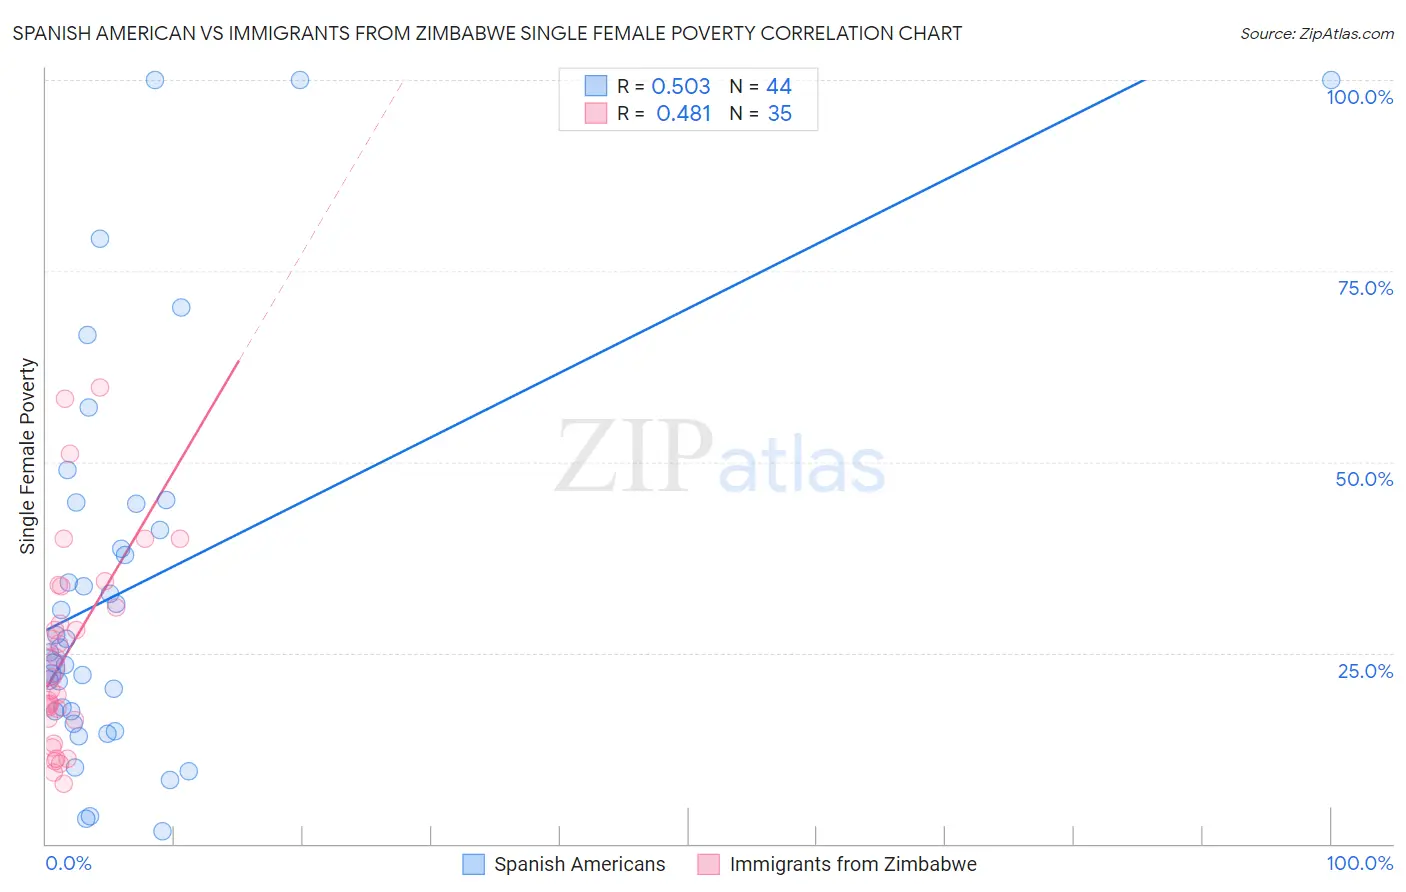 Spanish American vs Immigrants from Zimbabwe Single Female Poverty